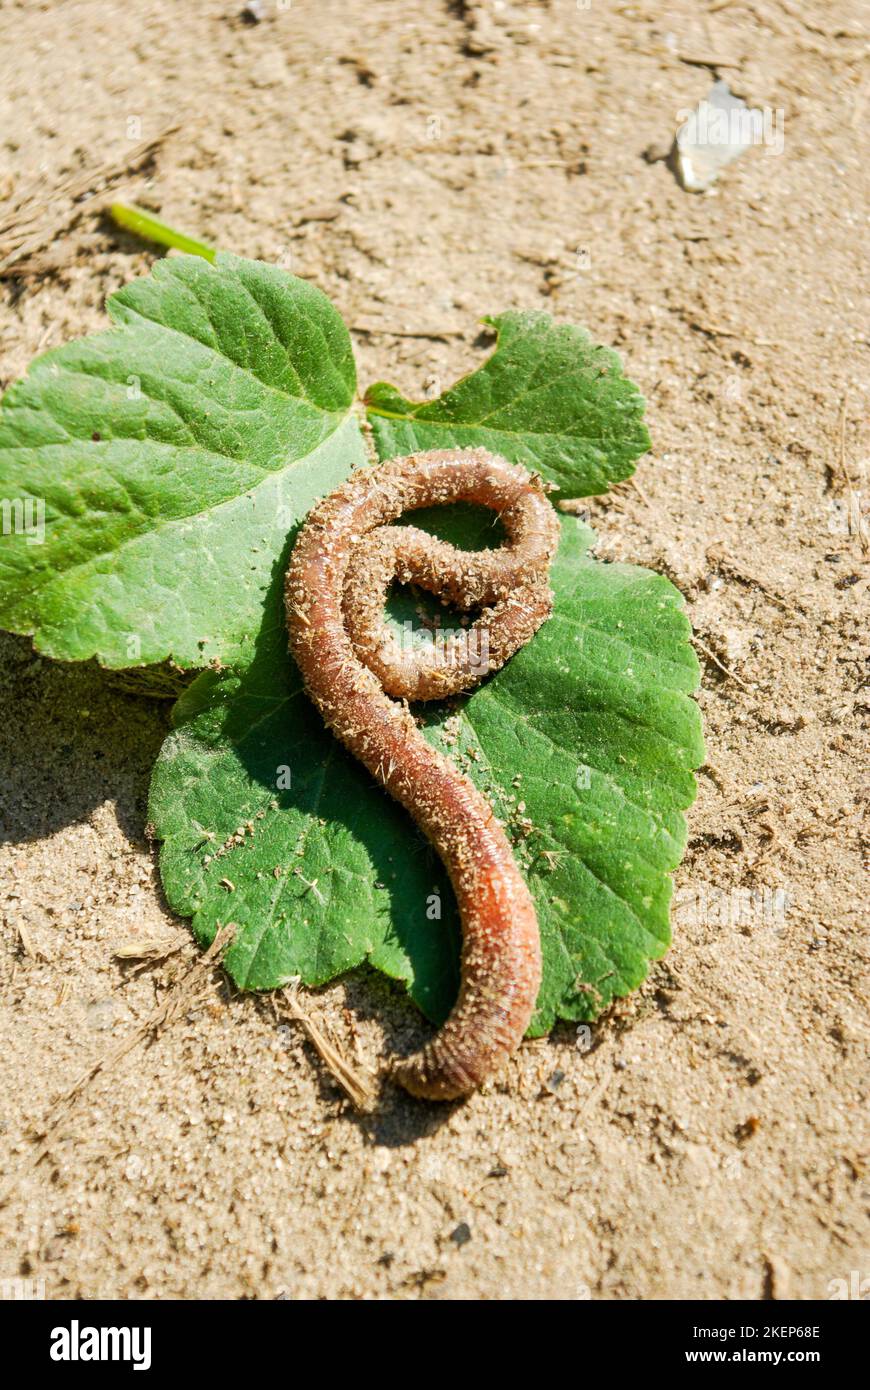 Worm in sand crawls Stock Photo